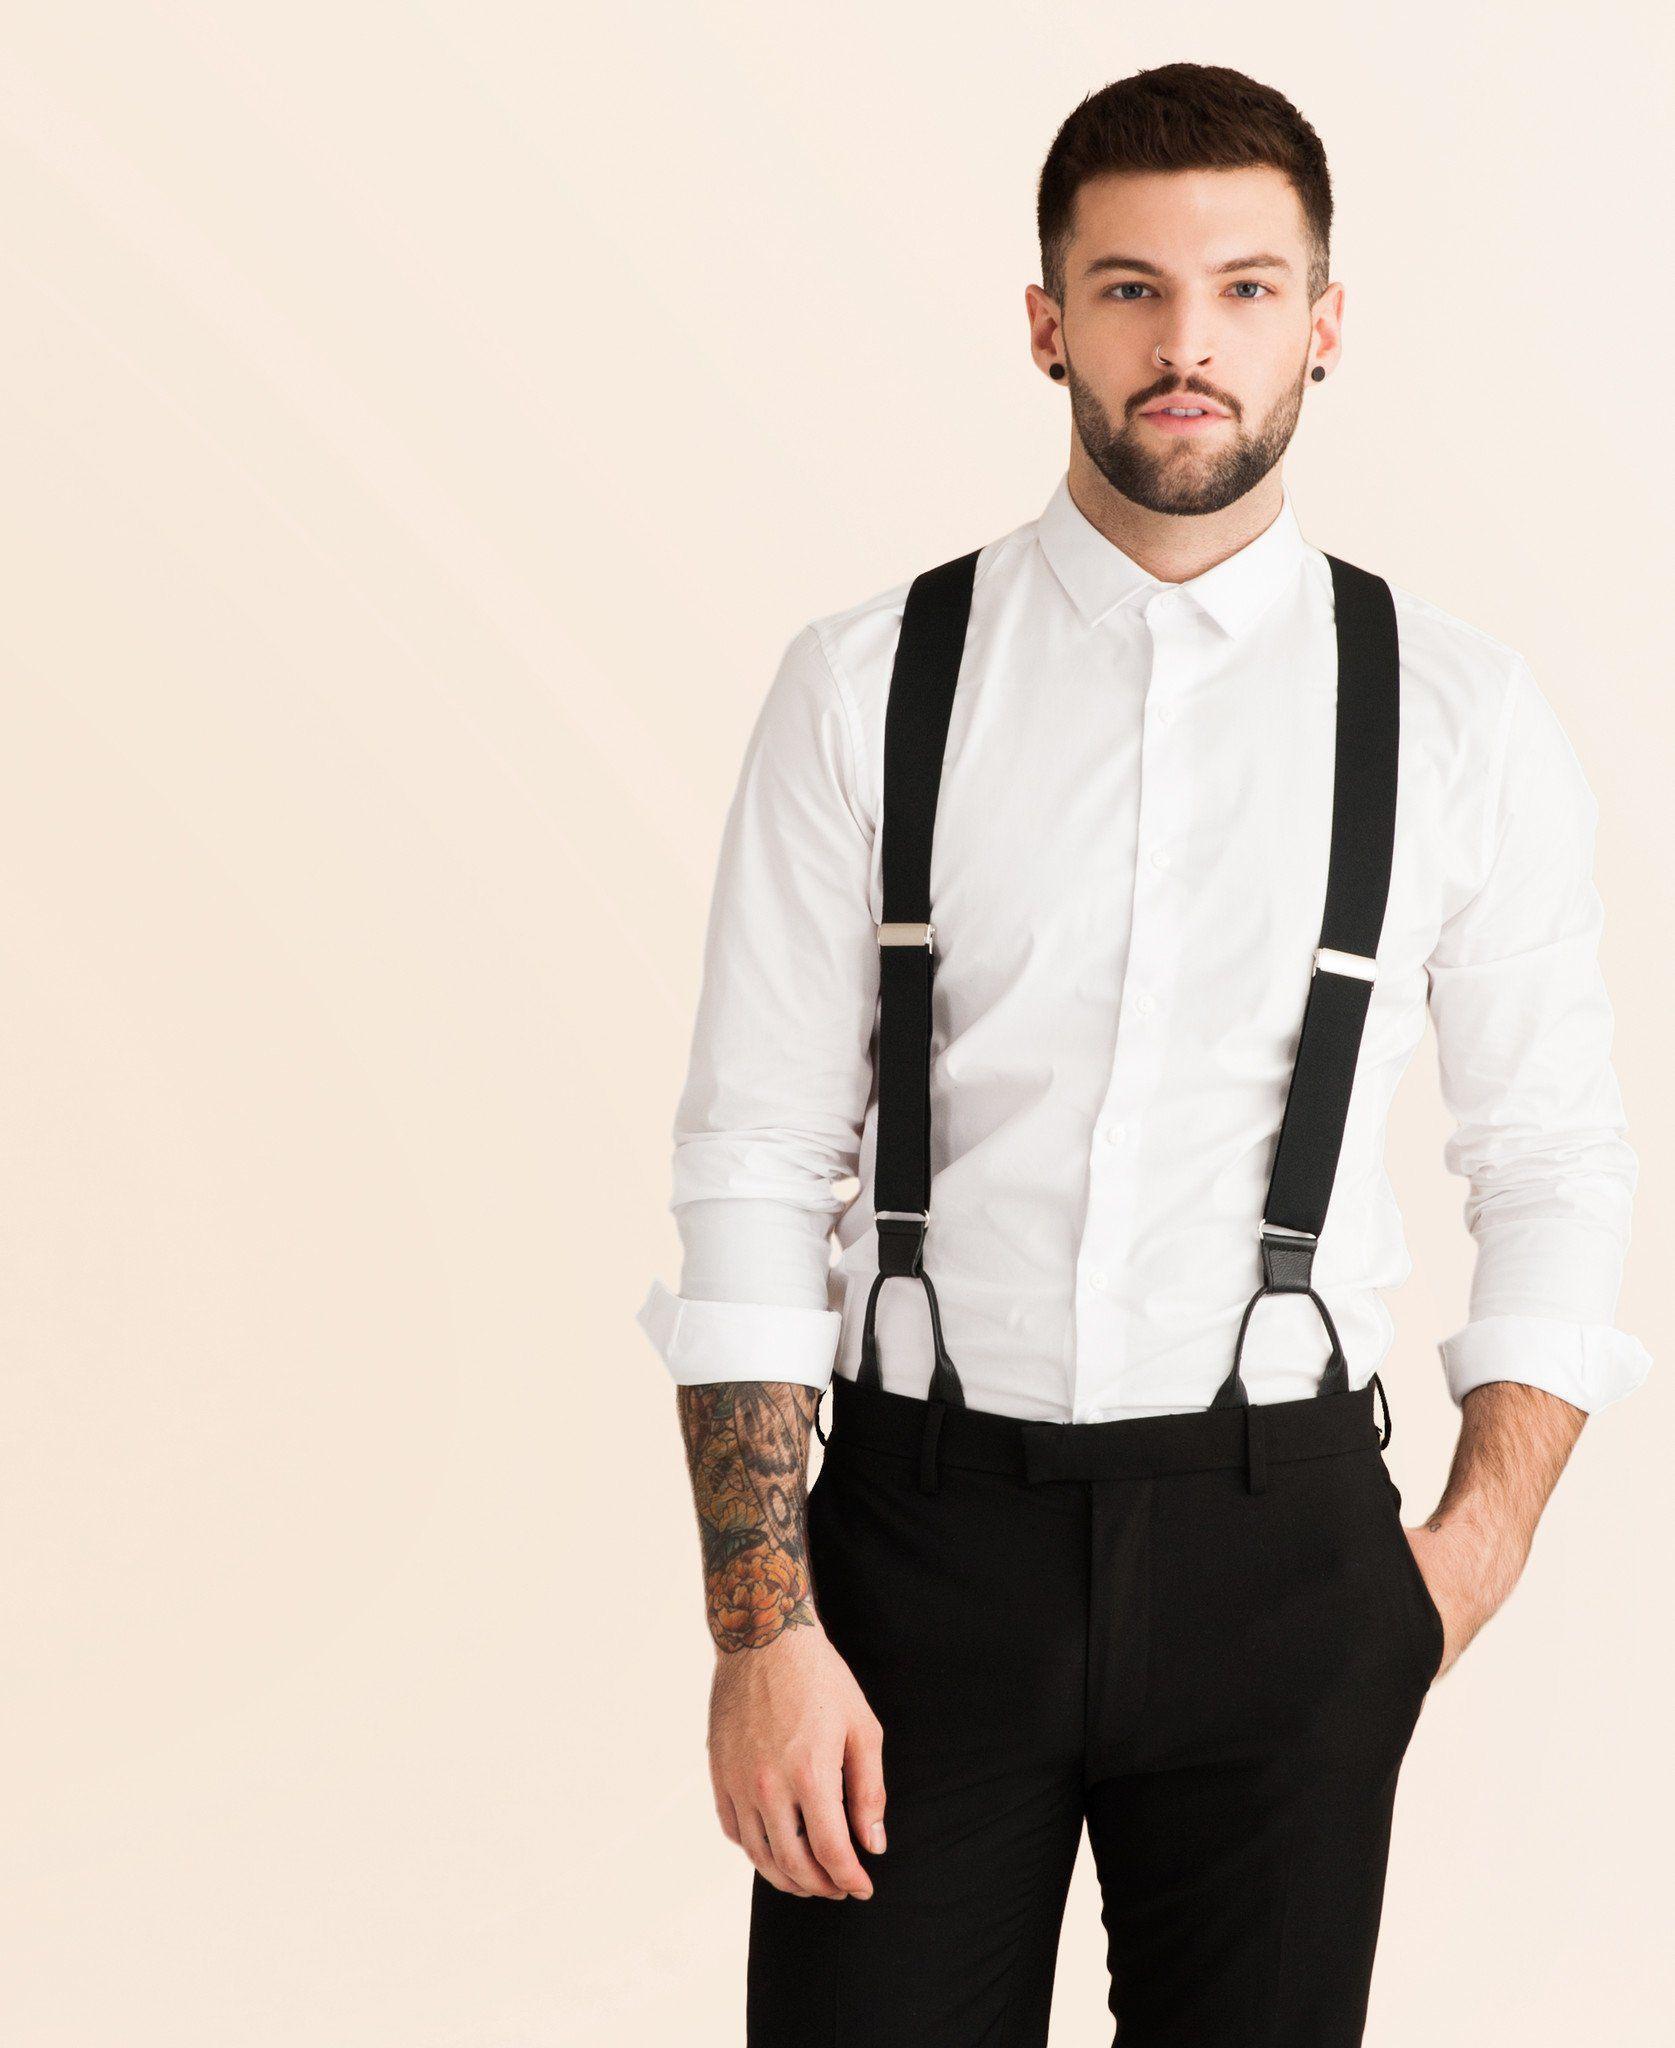 Back to Black - Formal Black Suspenders